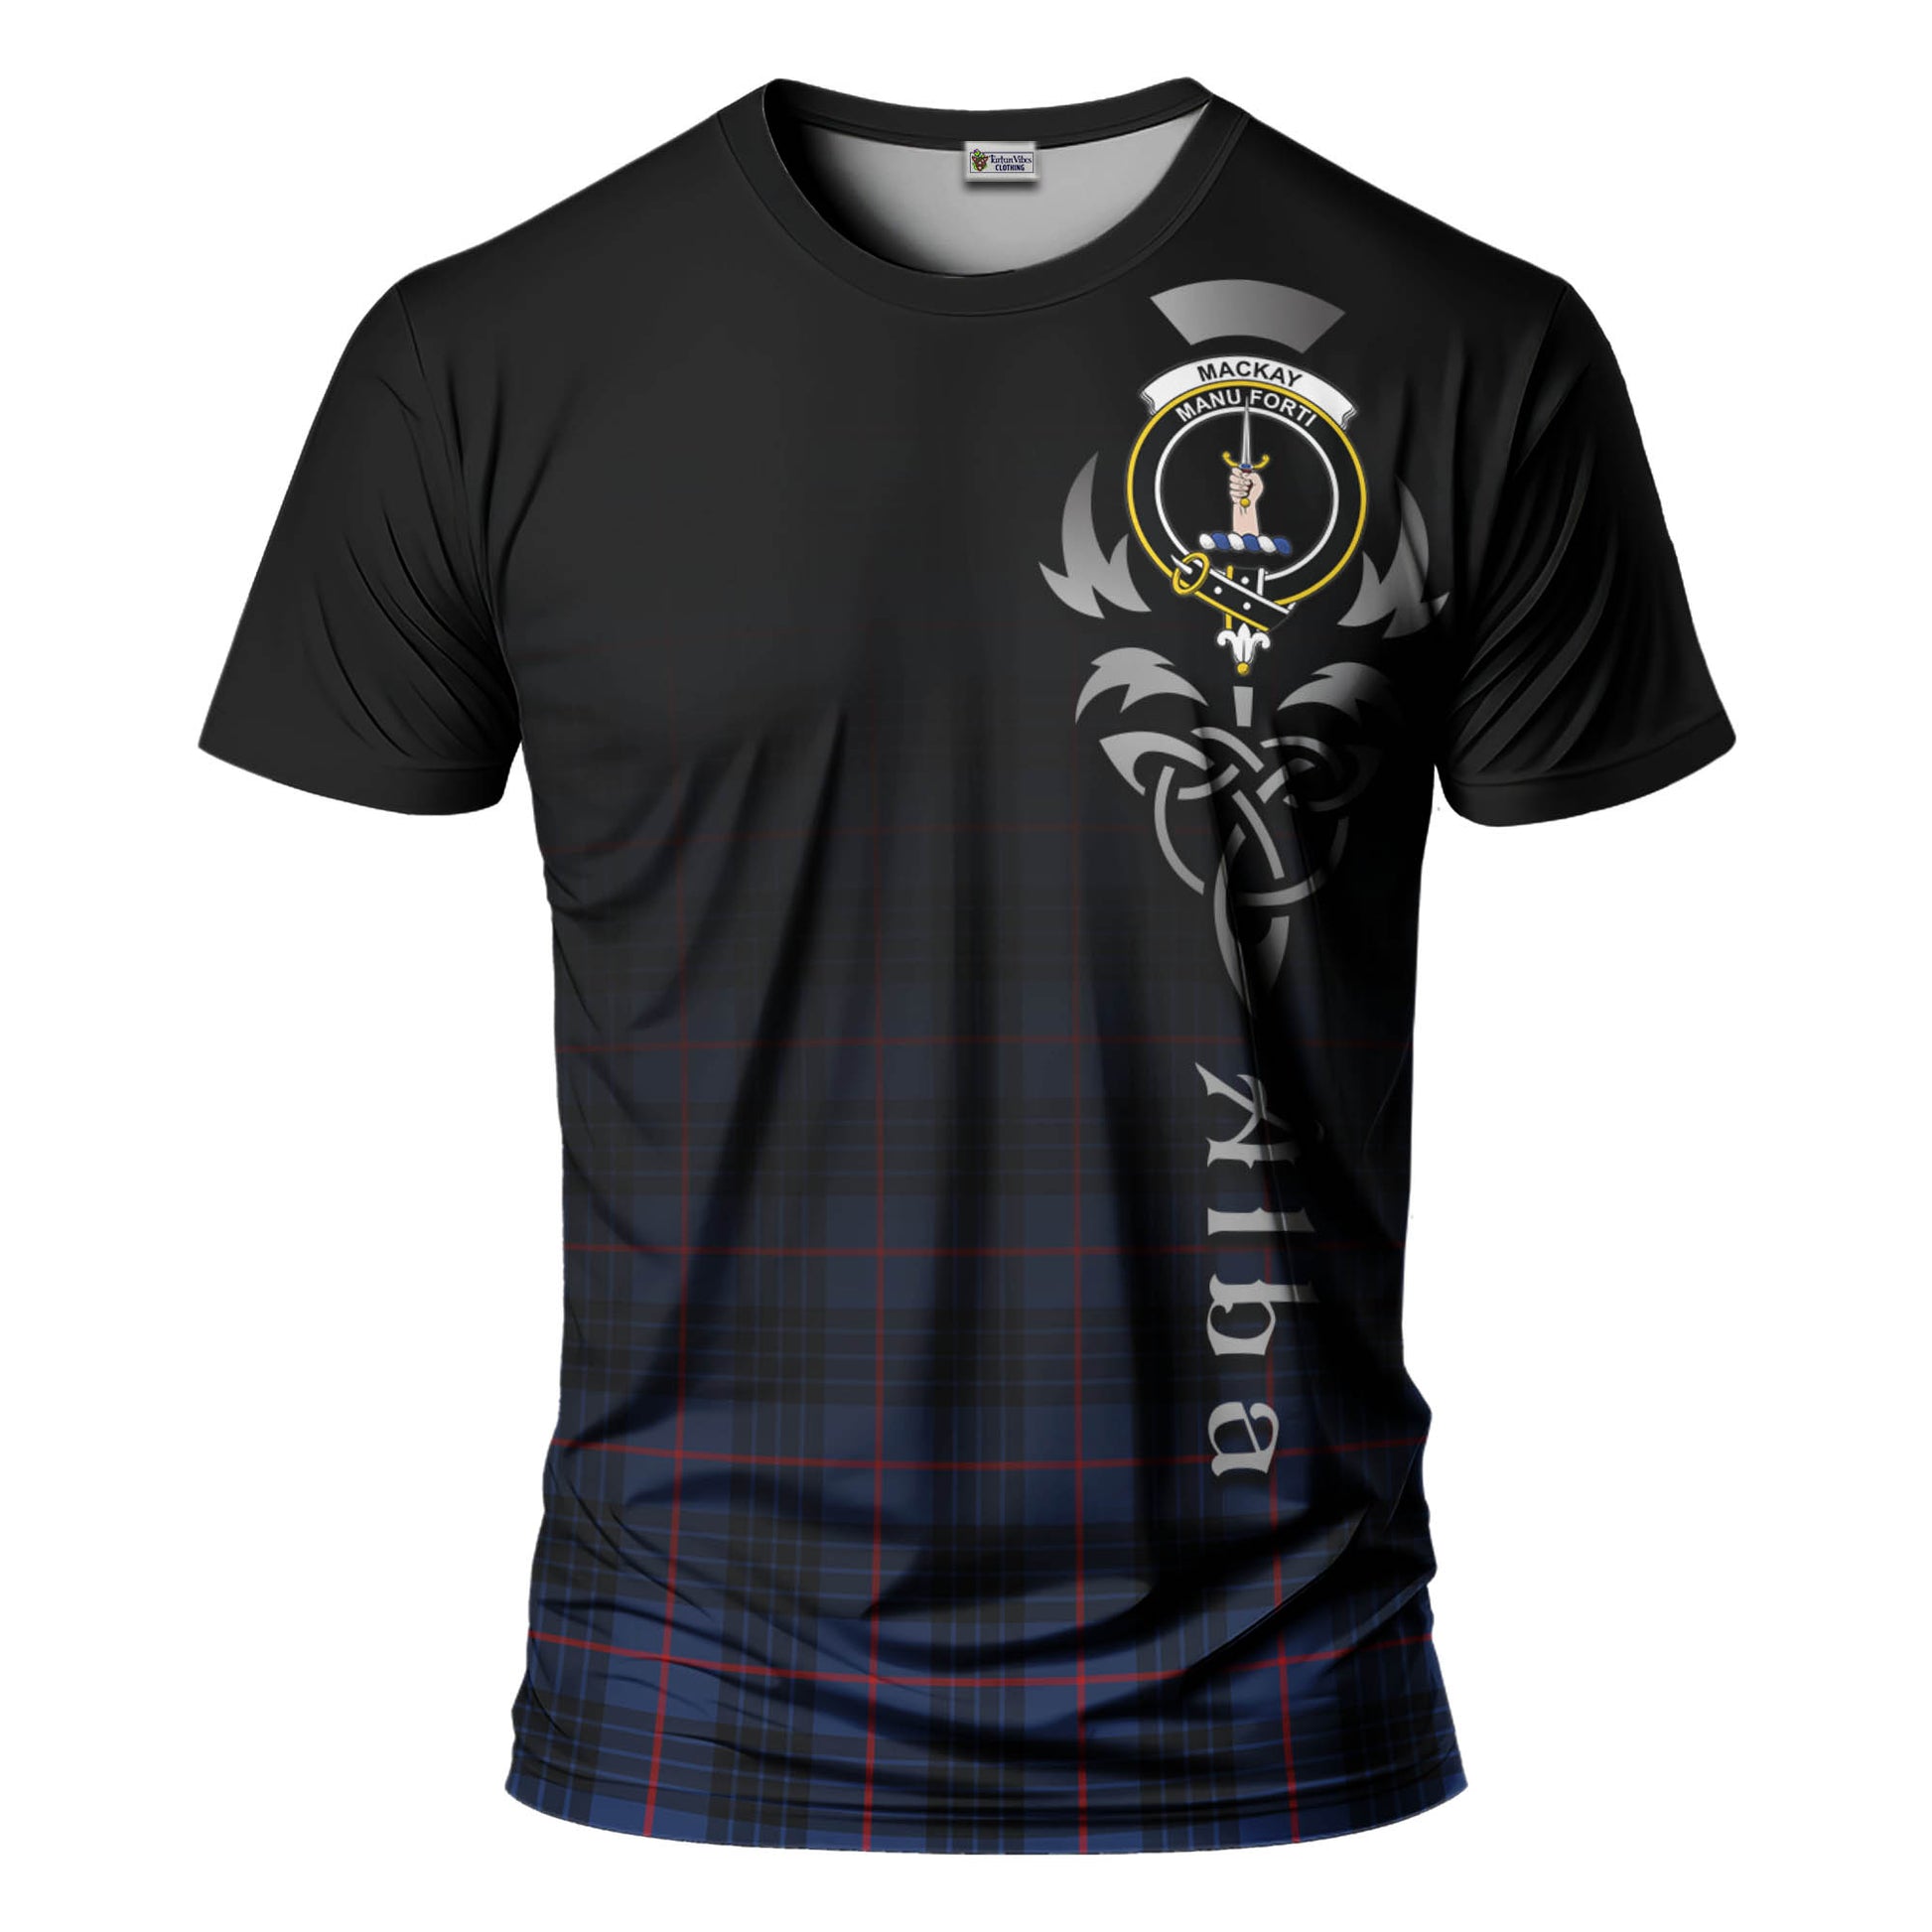 Tartan Vibes Clothing MacKay Blue Modern Tartan T-Shirt Featuring Alba Gu Brath Family Crest Celtic Inspired